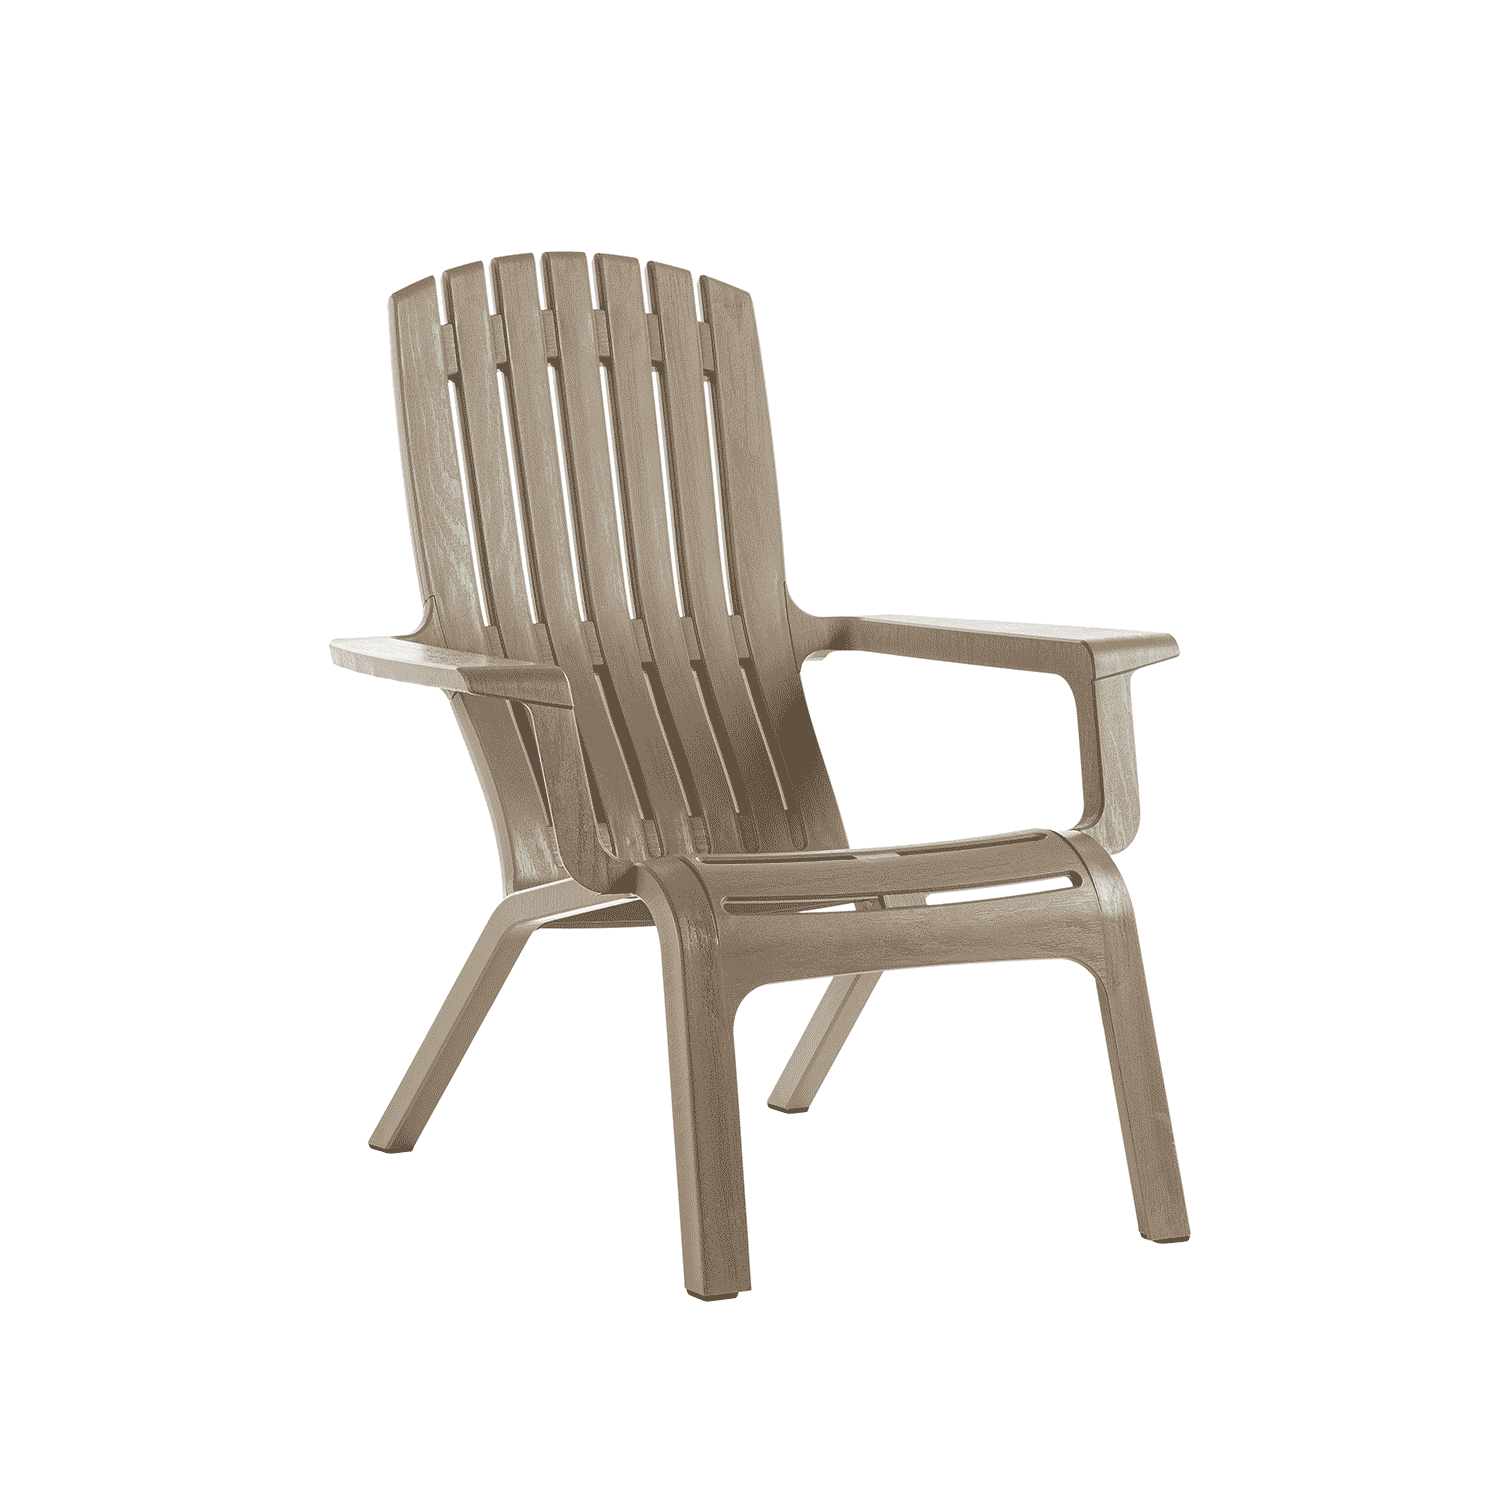 Adirondack chair - Westport